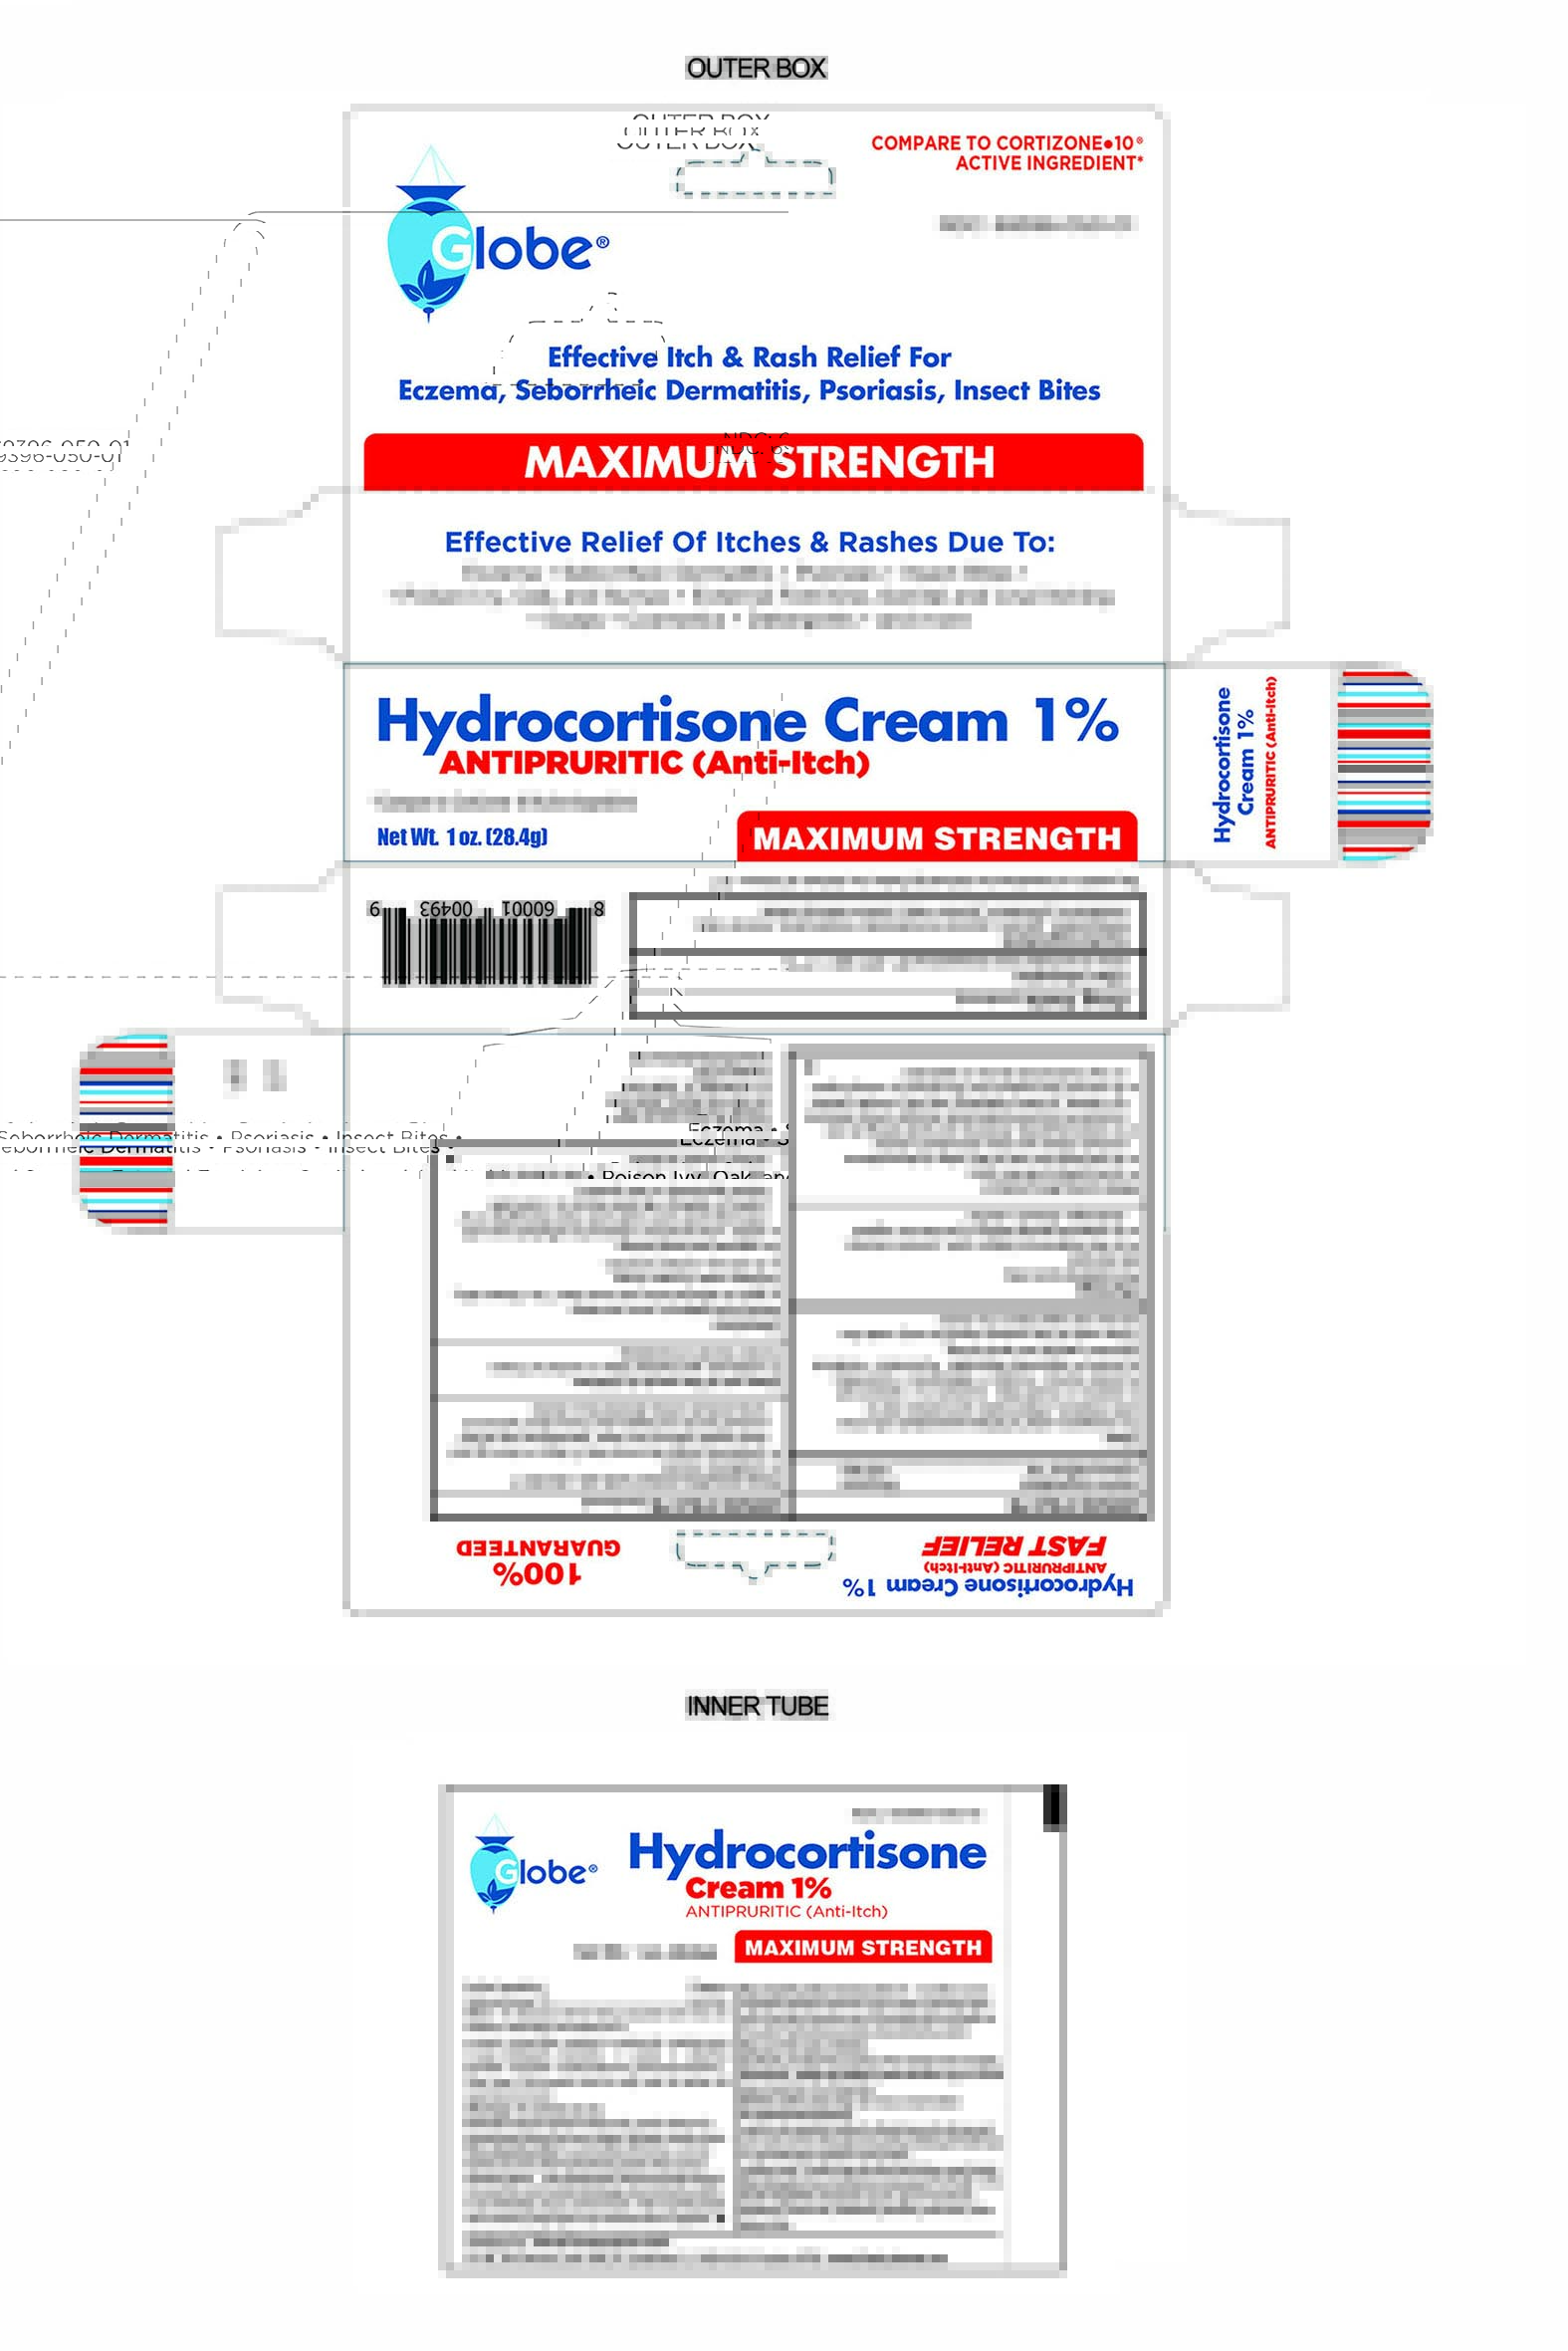 hydrocortisone1oz small box and tube-2